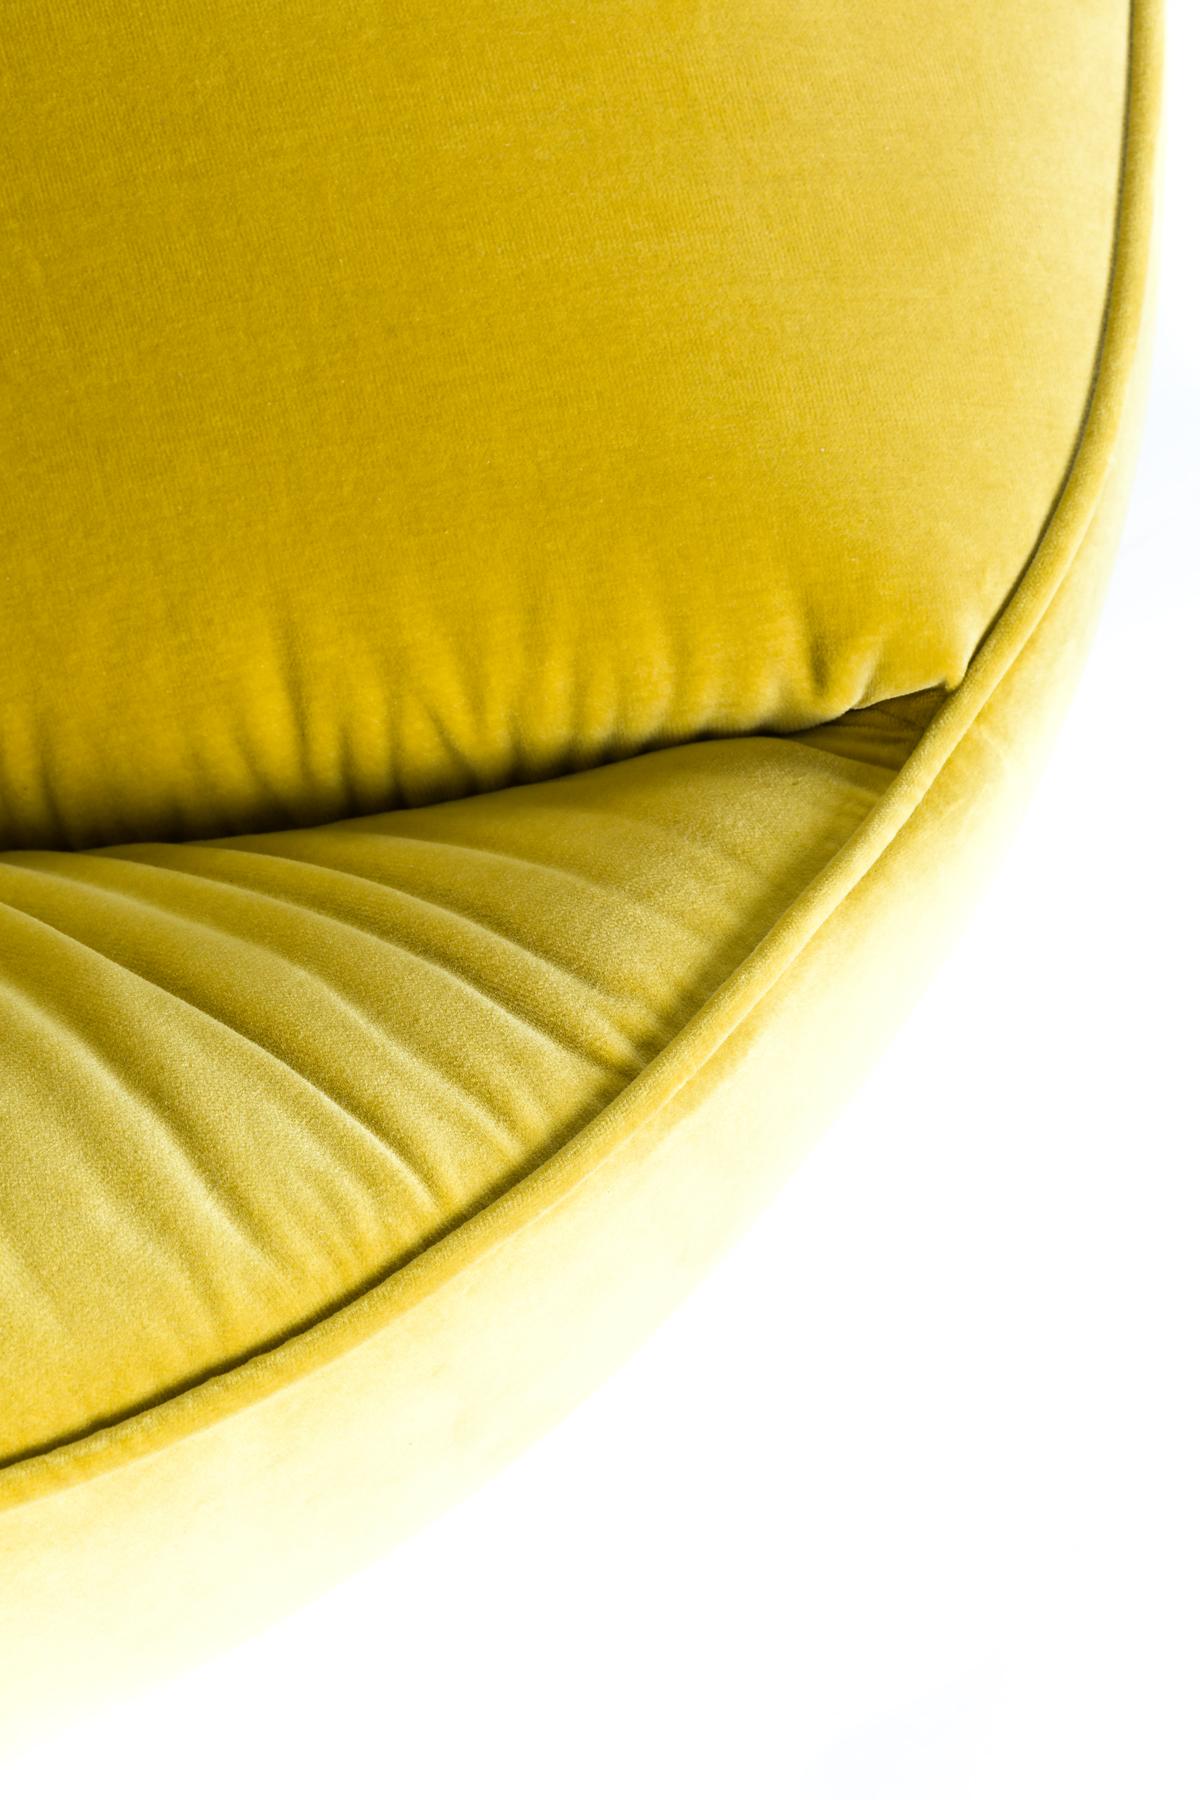 Dutch Moooi Hana Wingback Swivel Chair in Harald 3, 443 Yellow Upholstery For Sale